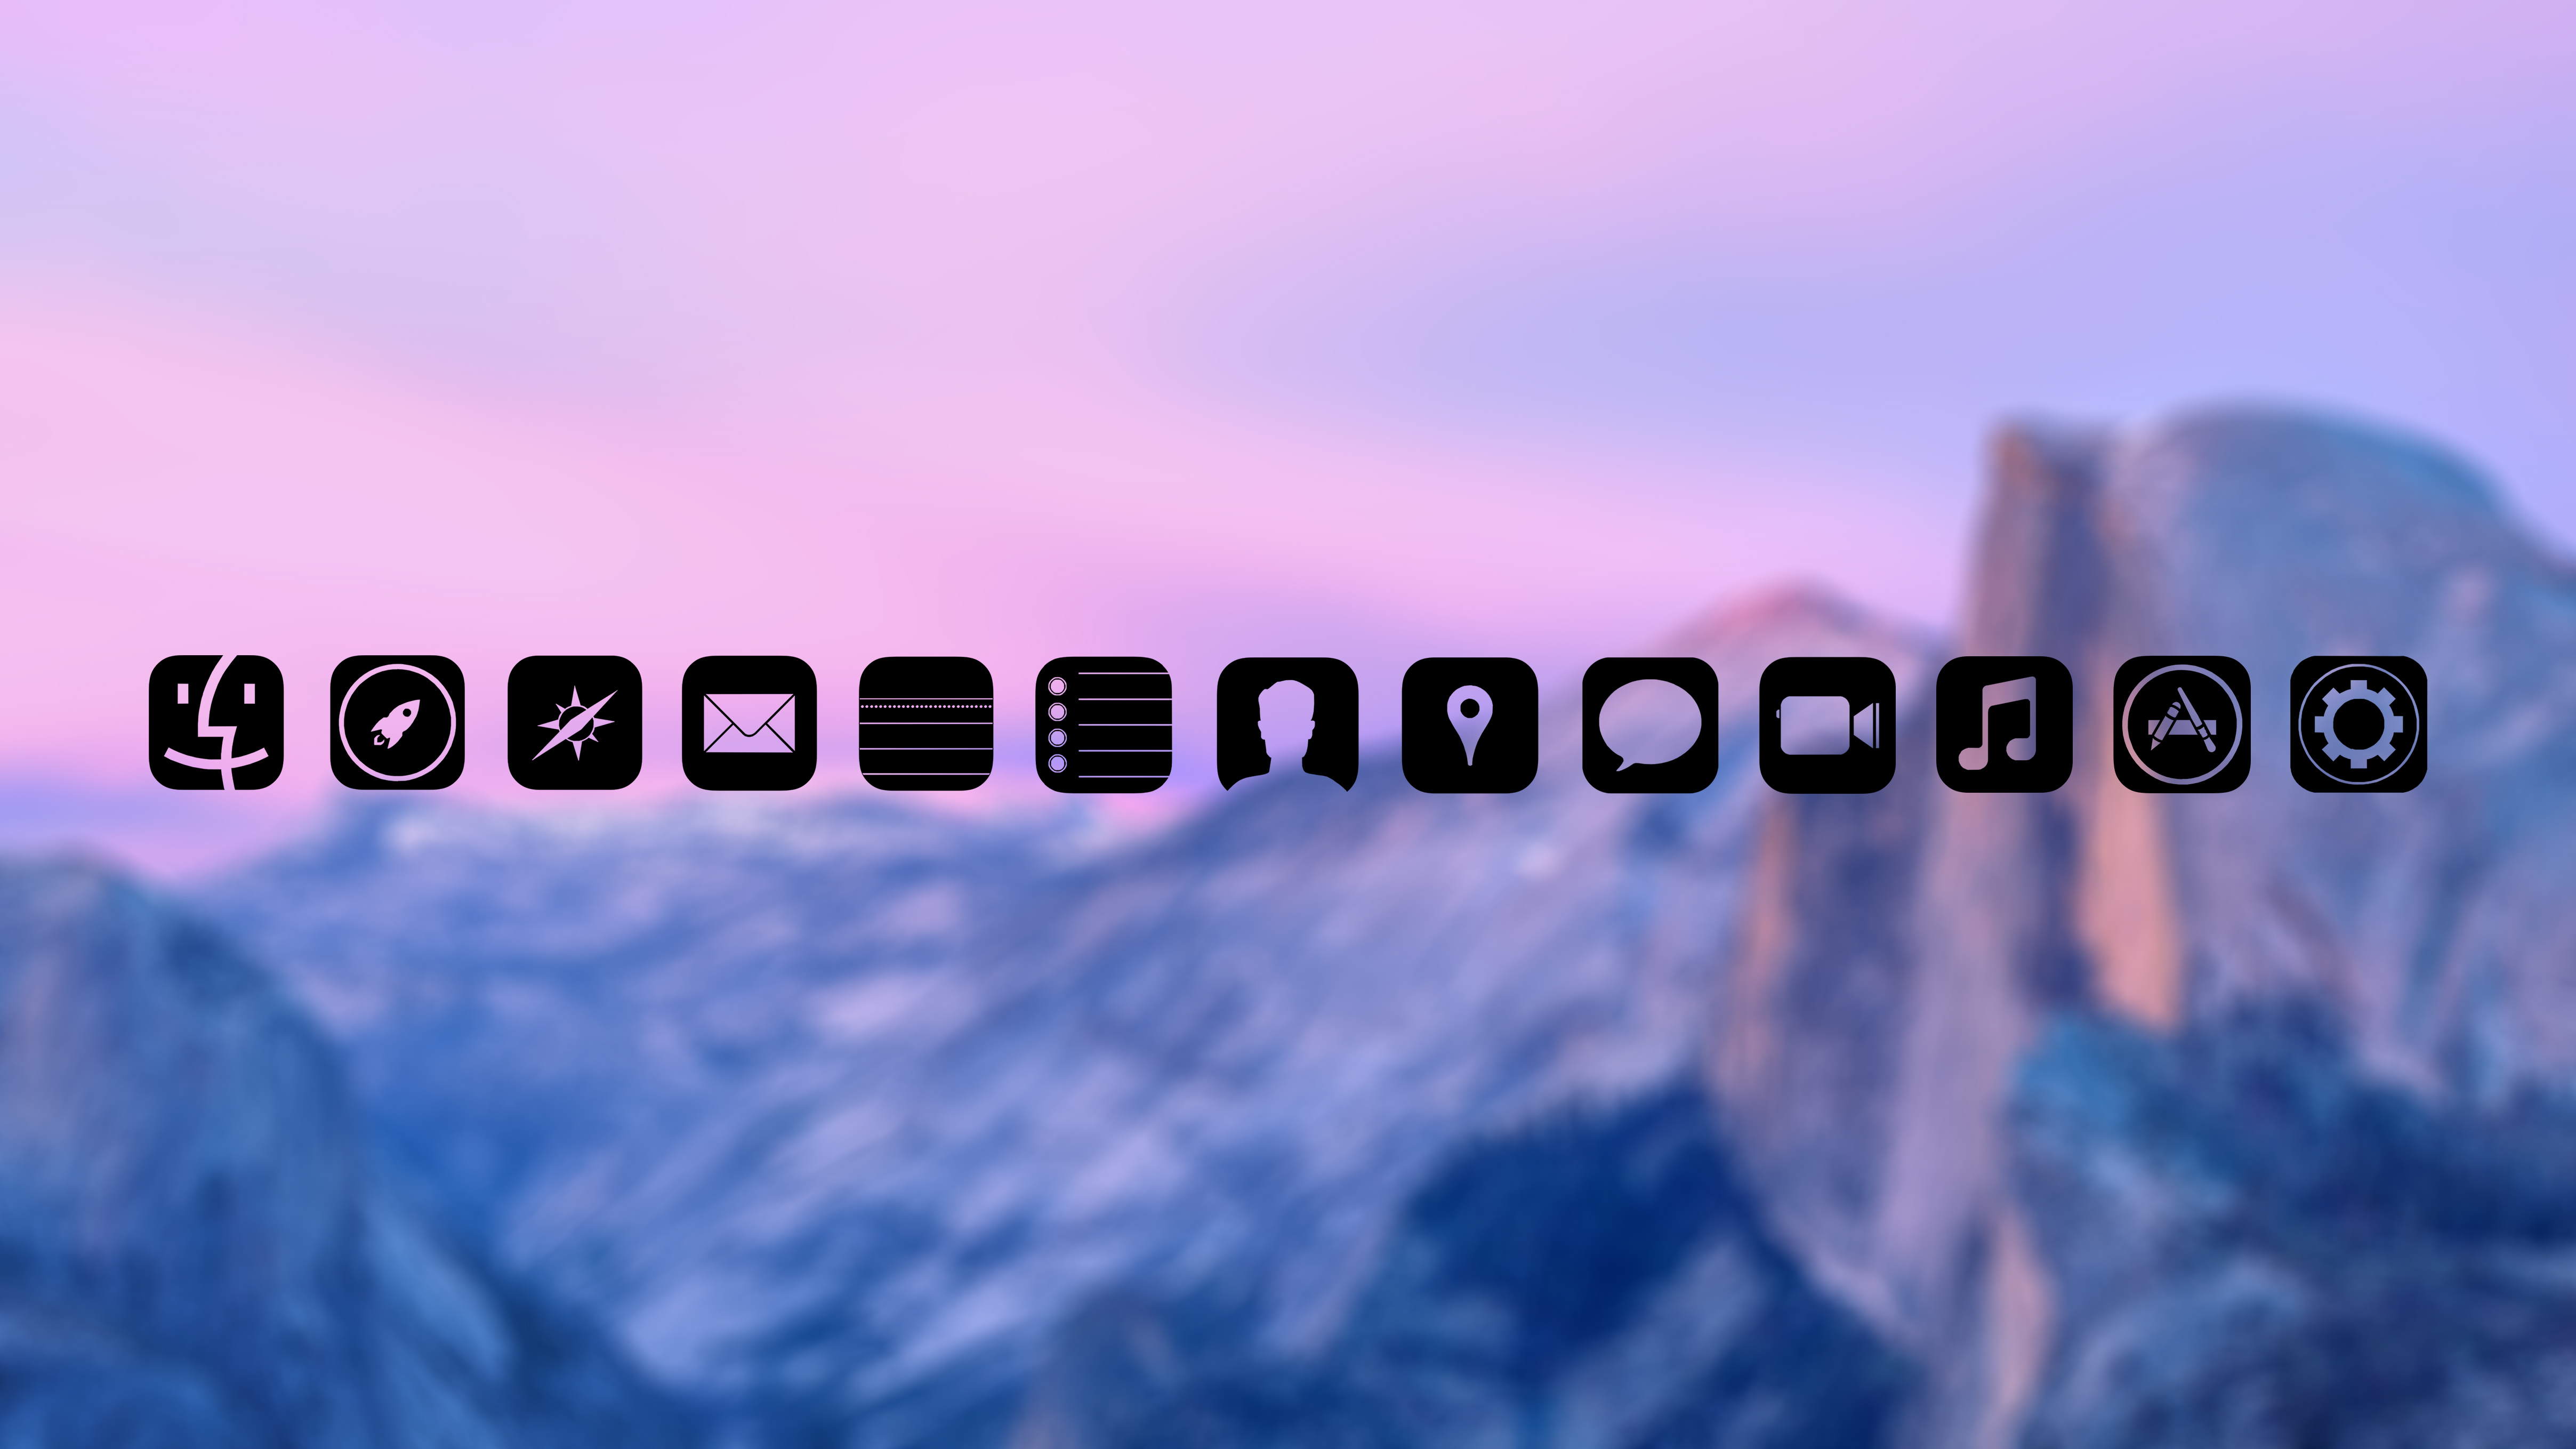 IOS Icons for Mac Black